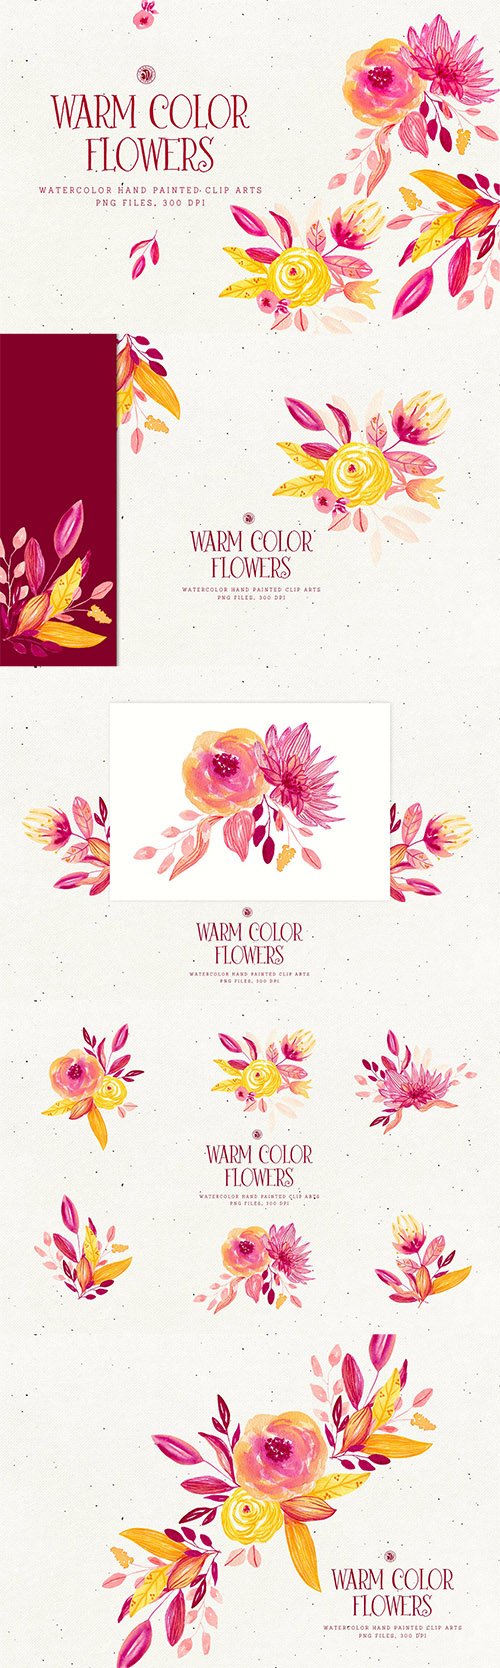 Warm Color Flowers PNG